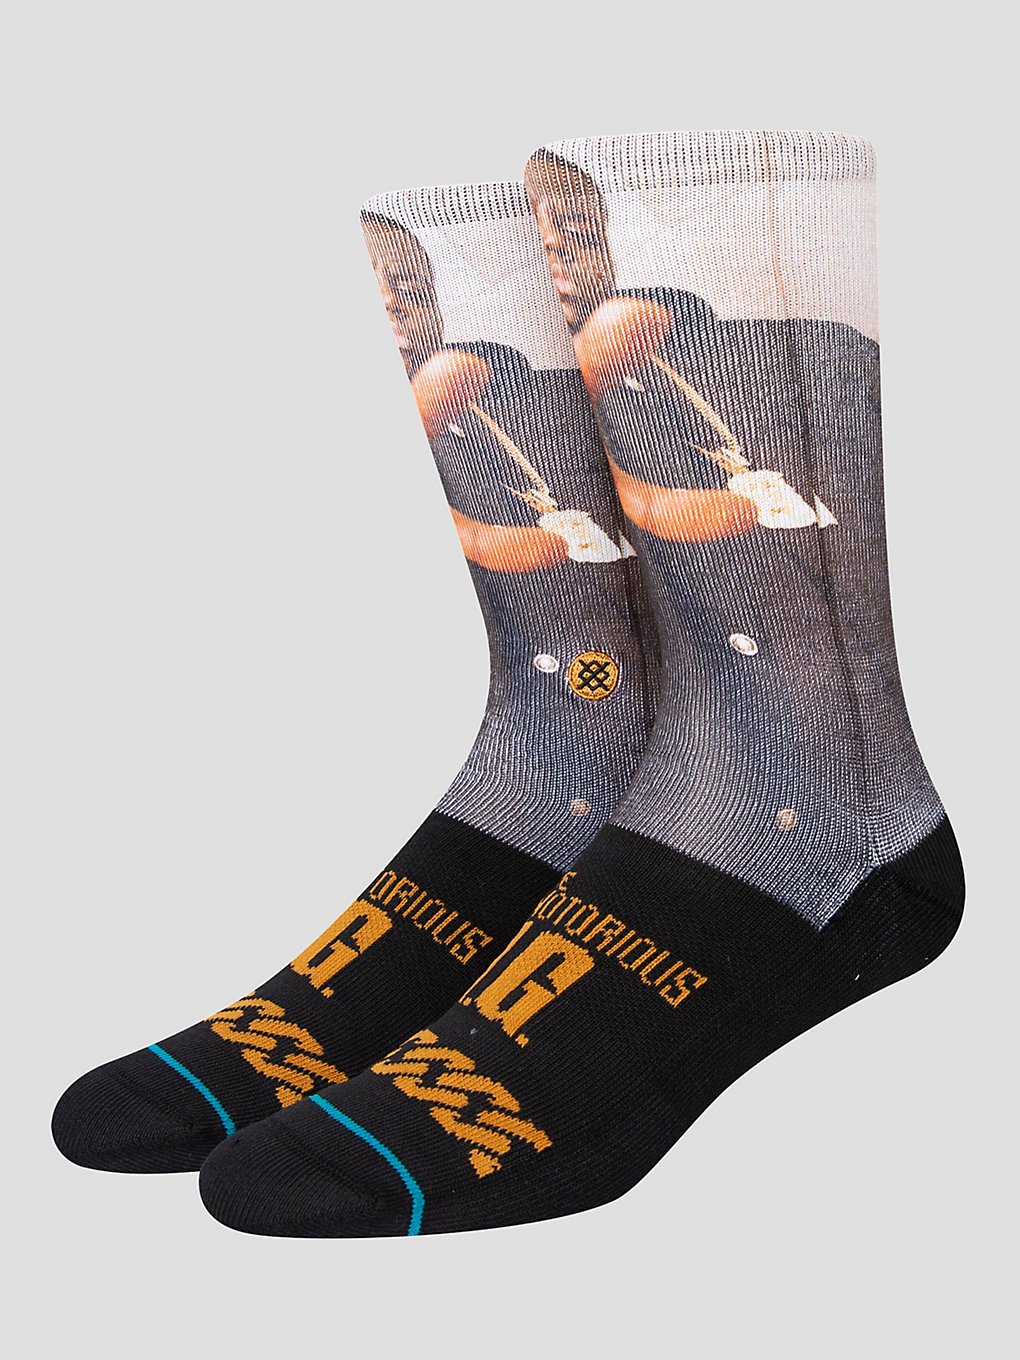 Stance The King Of Ny Socken black kaufen